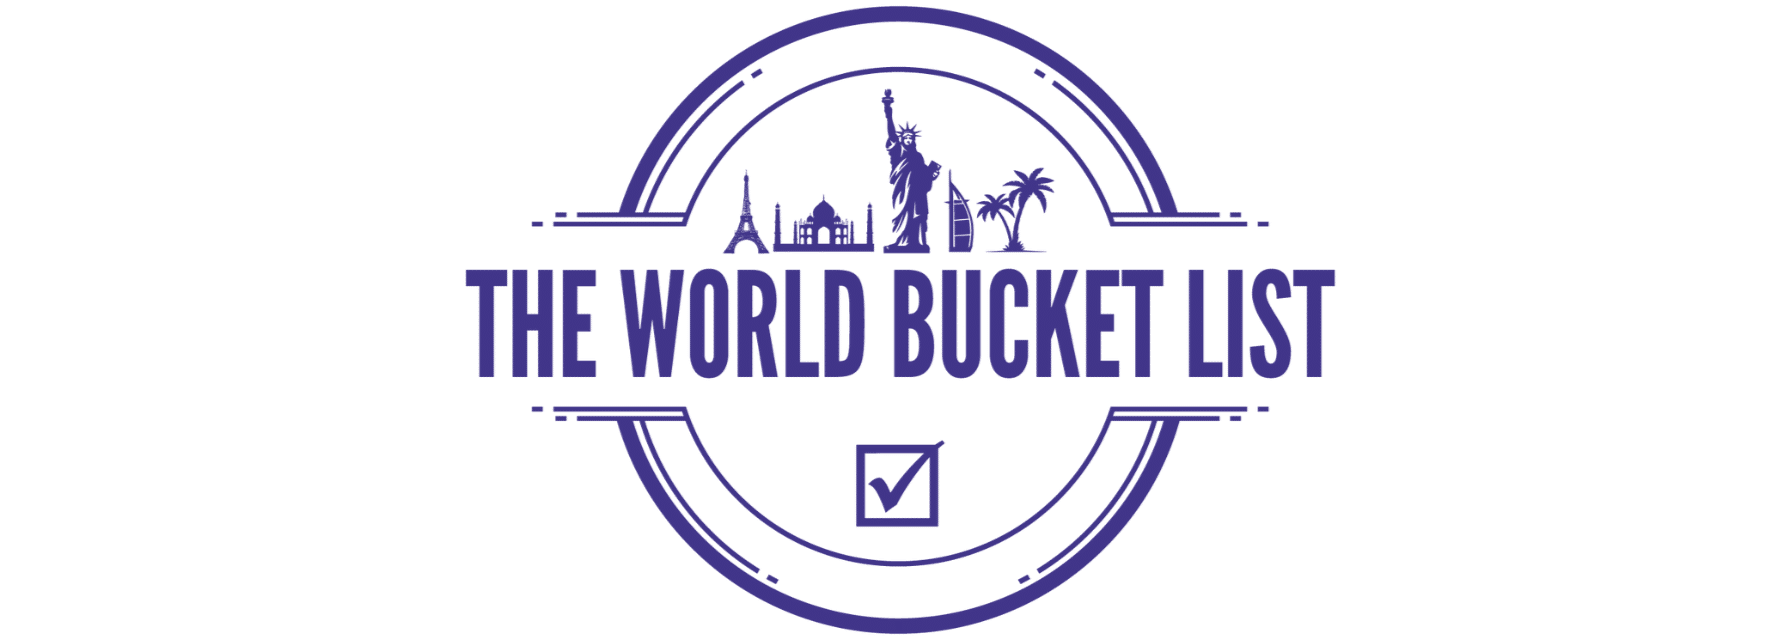 The World Bucket List